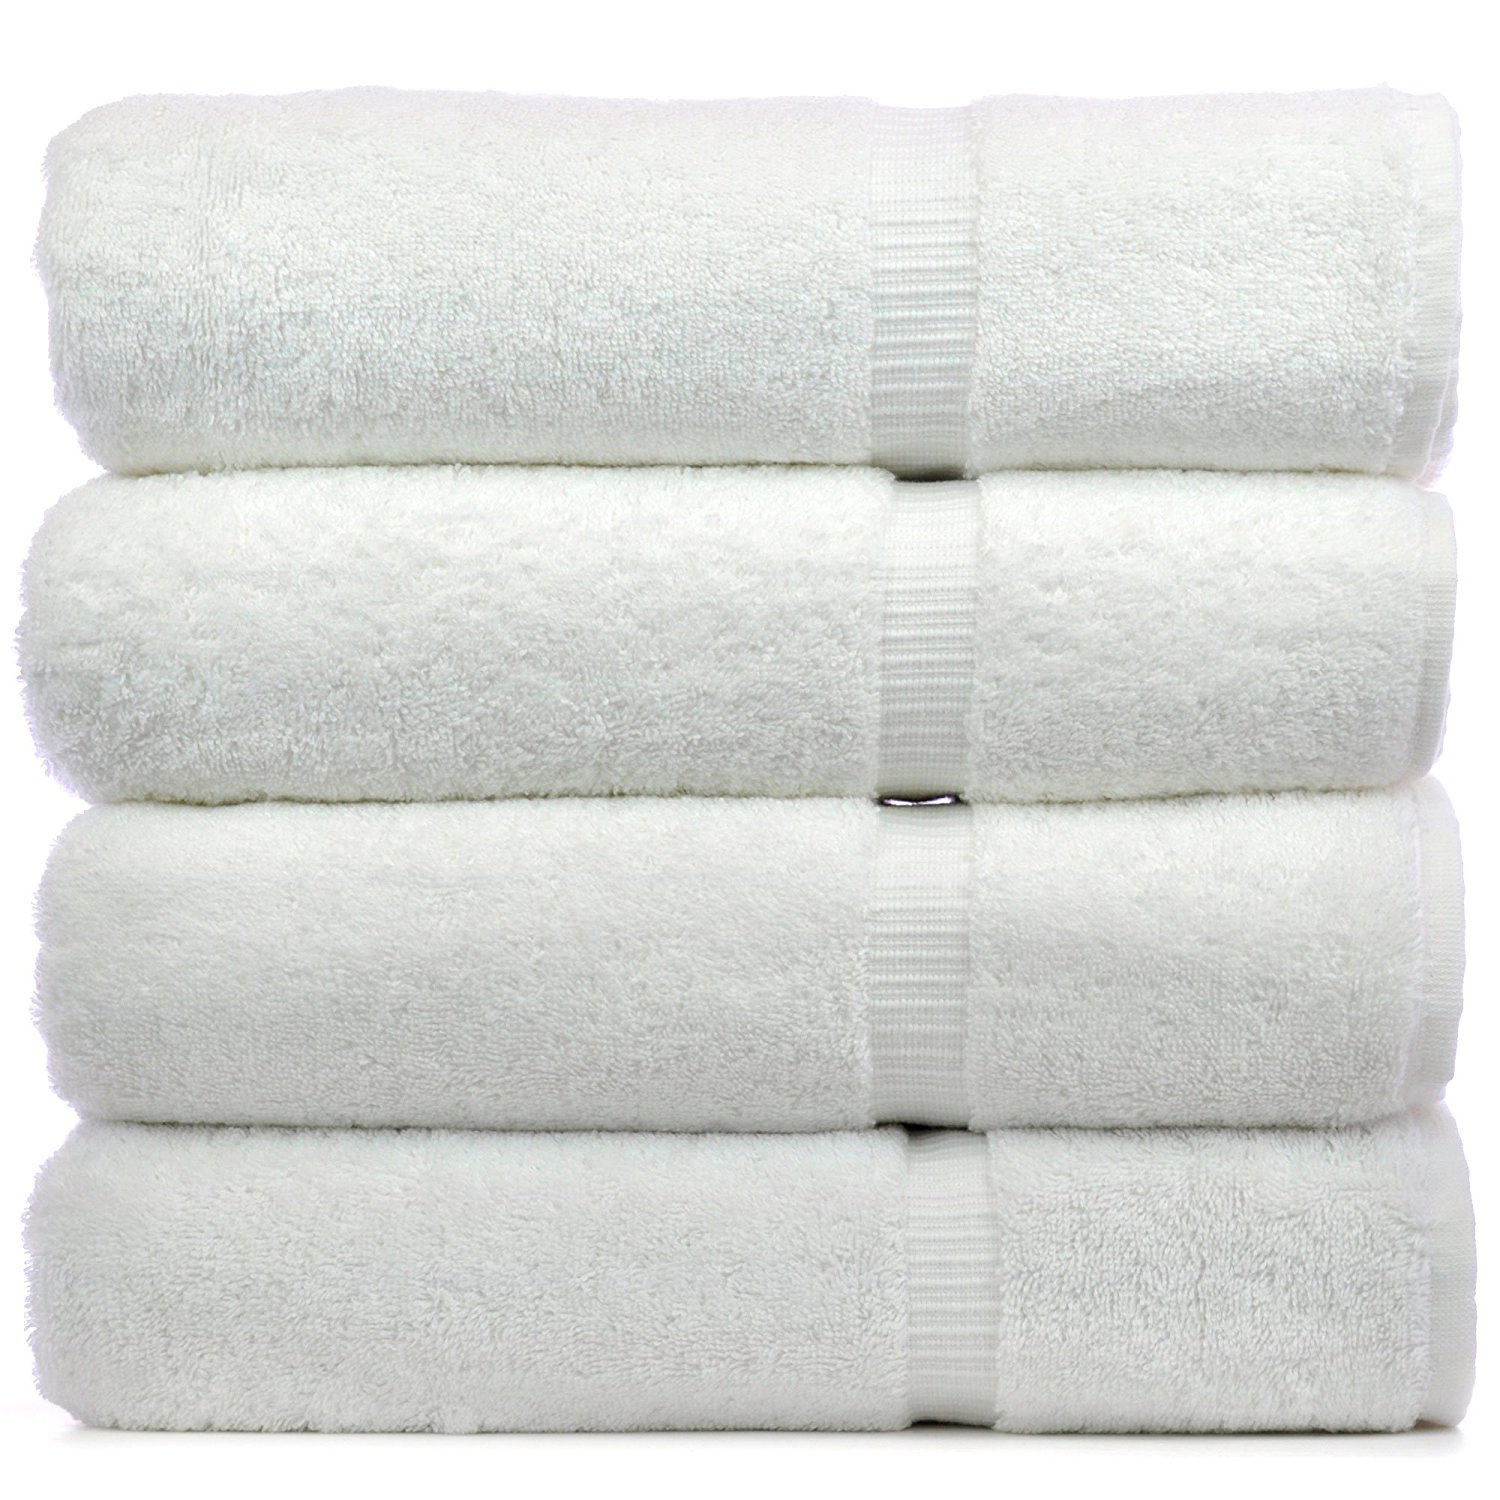 Large Bath Mat-Set of 2, White Chakir Turkish Linens Dobby Border Turkish Cotton Luxury Hotel & Spa